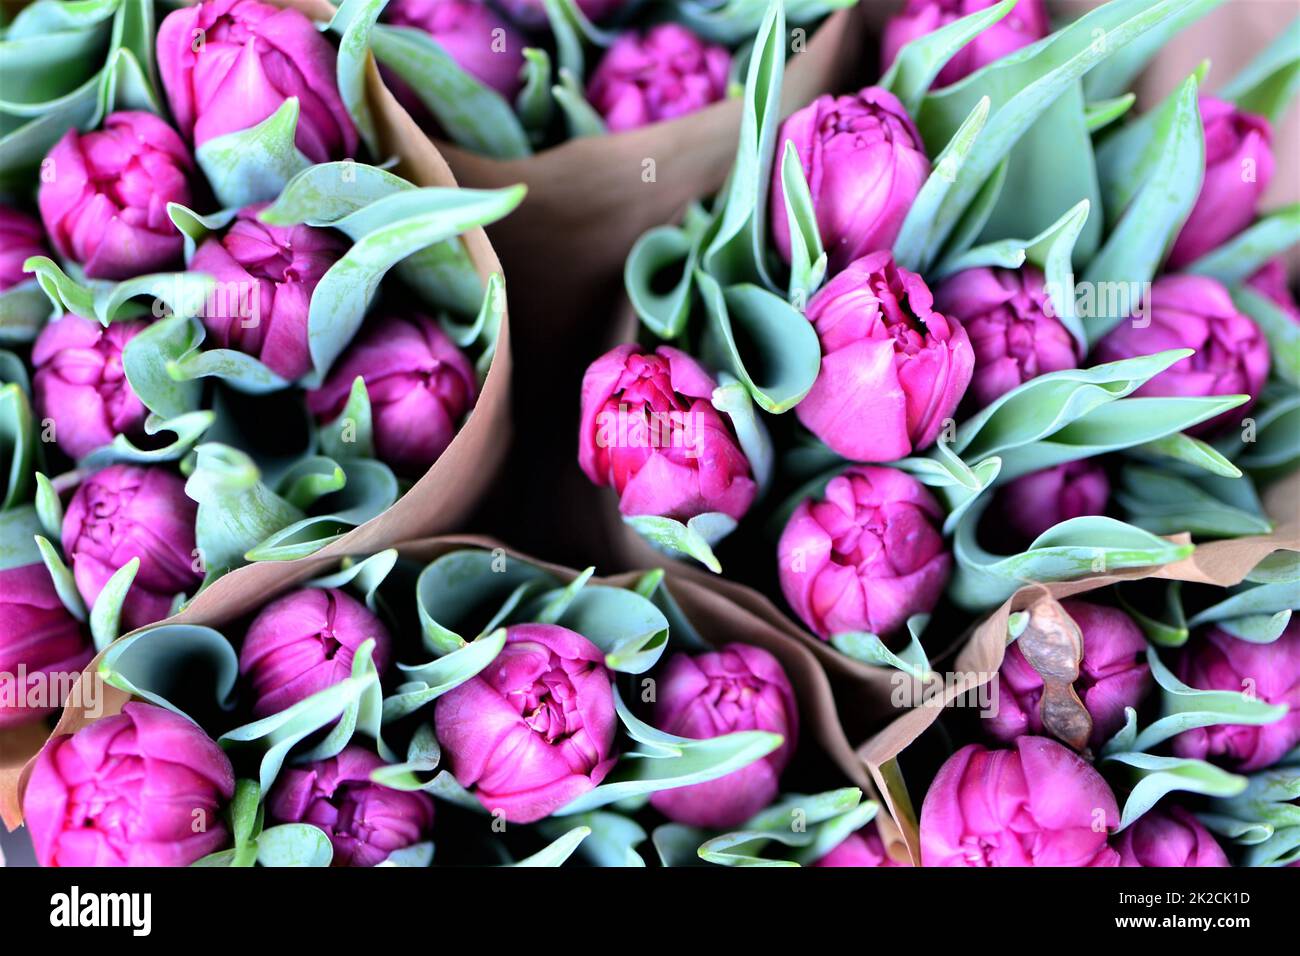 Nahaufnahme von lila Tulpen von oben Stockfoto